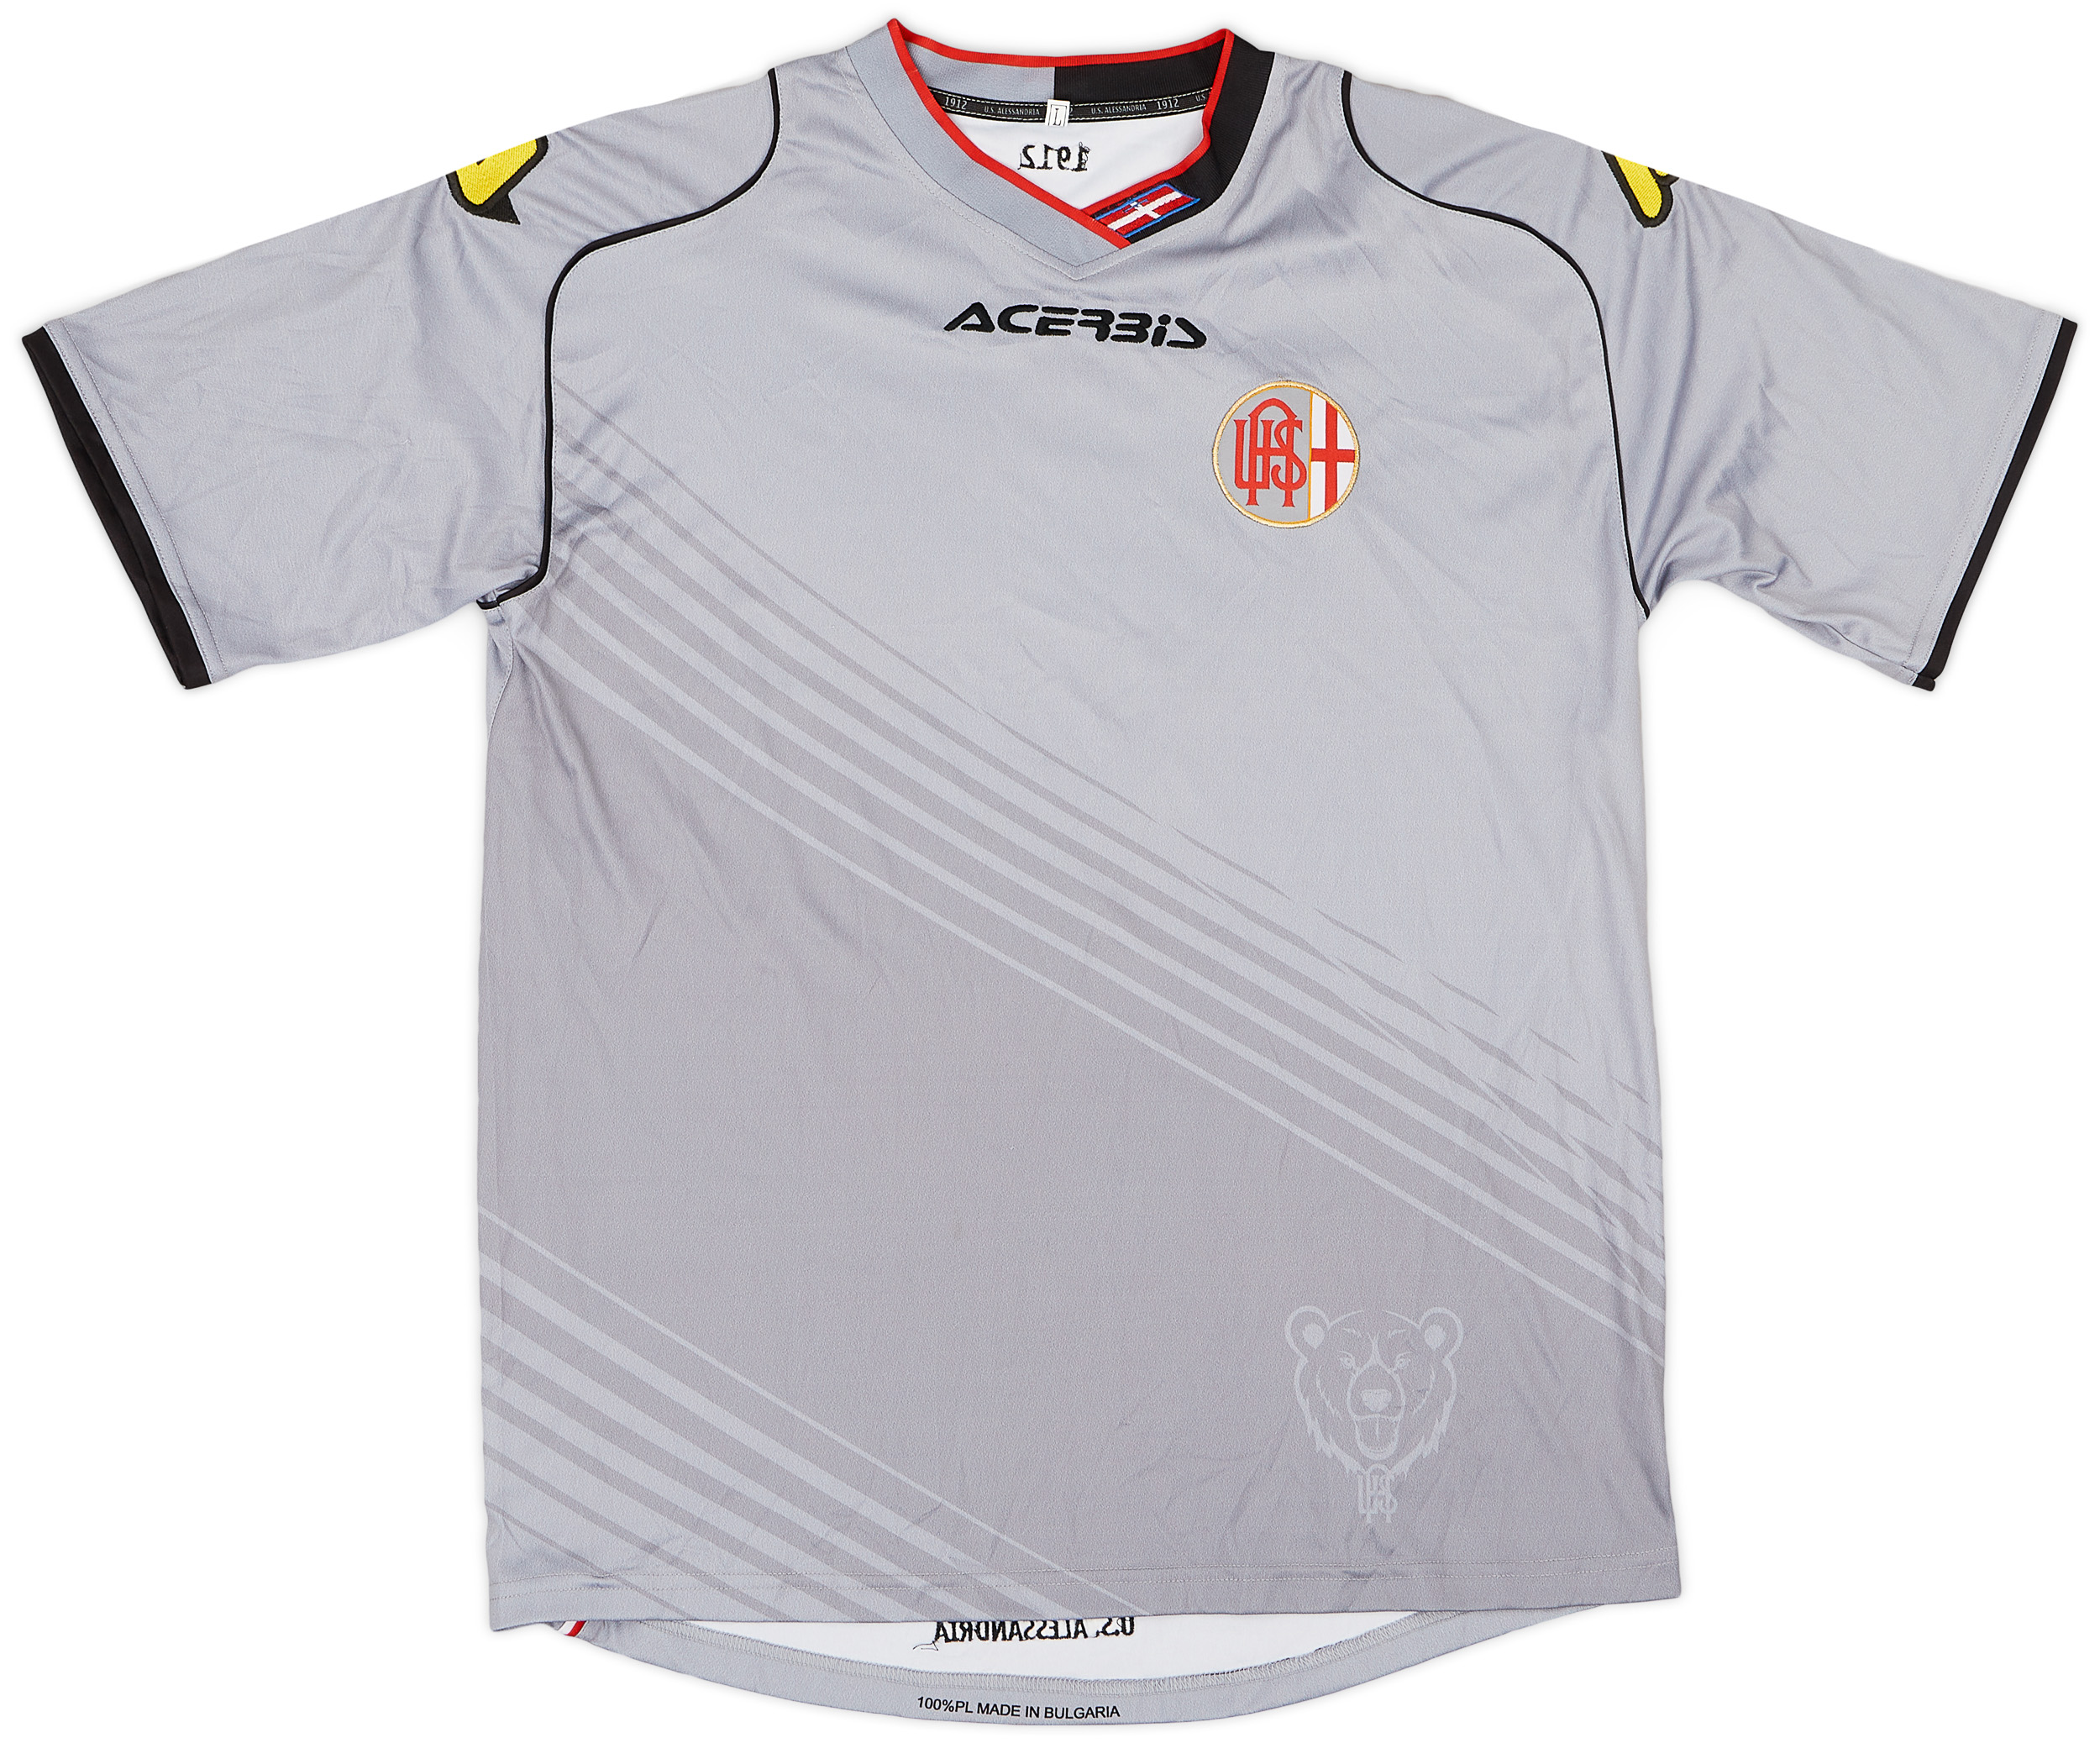 U.S. Alessandria Calcio 1912  home Camiseta (Original)